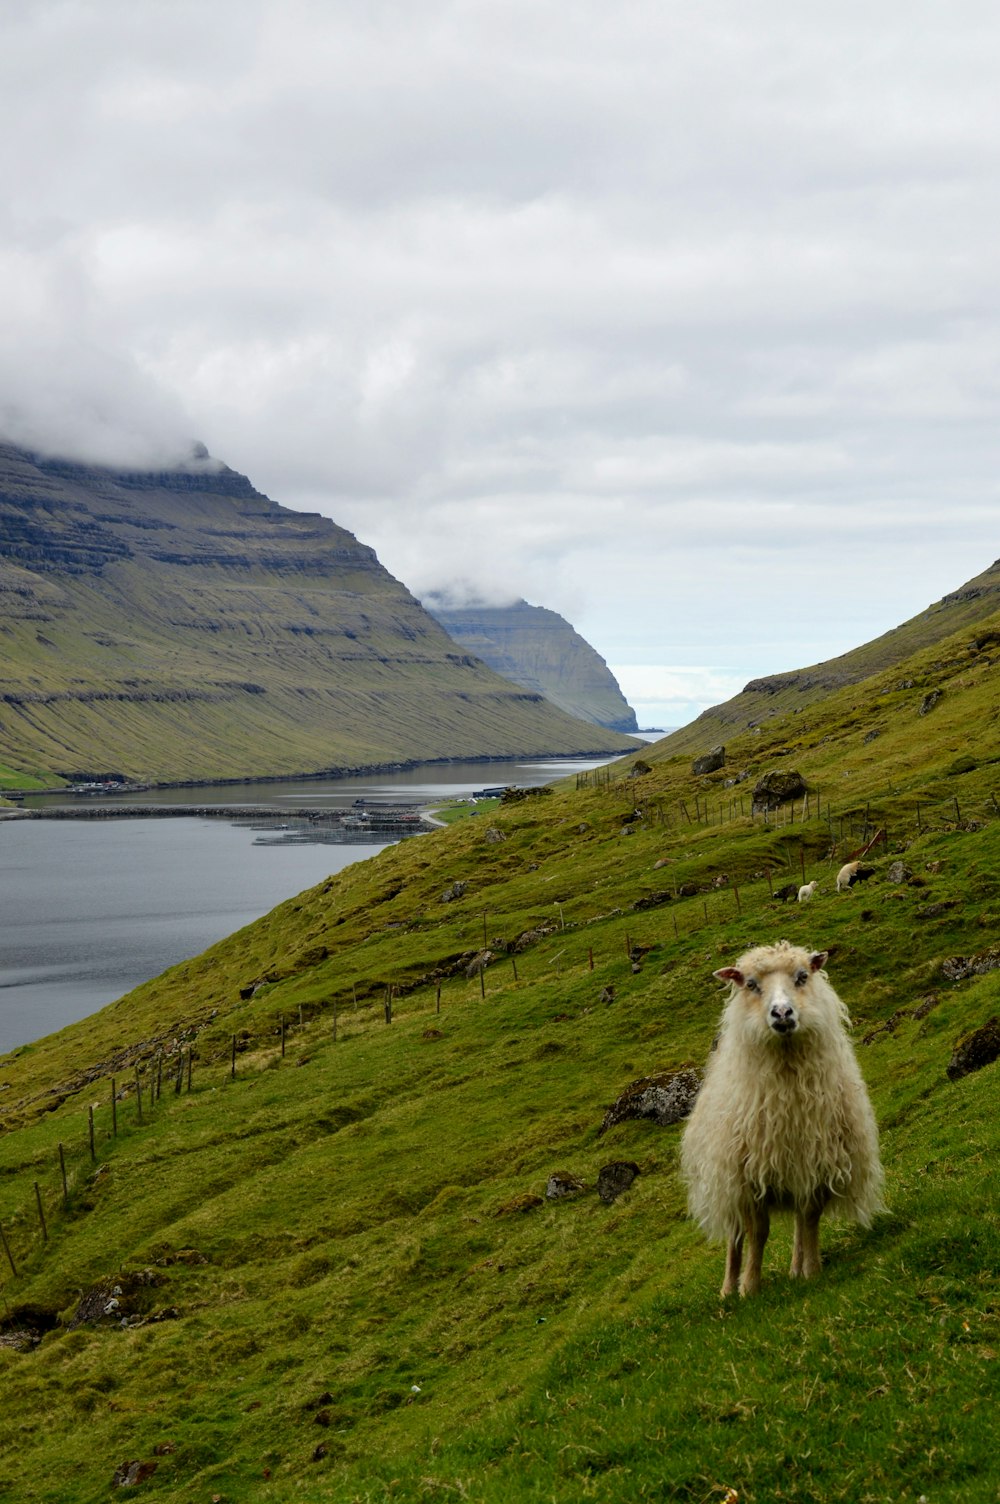 Un mouton debout sur une colline verdoyante